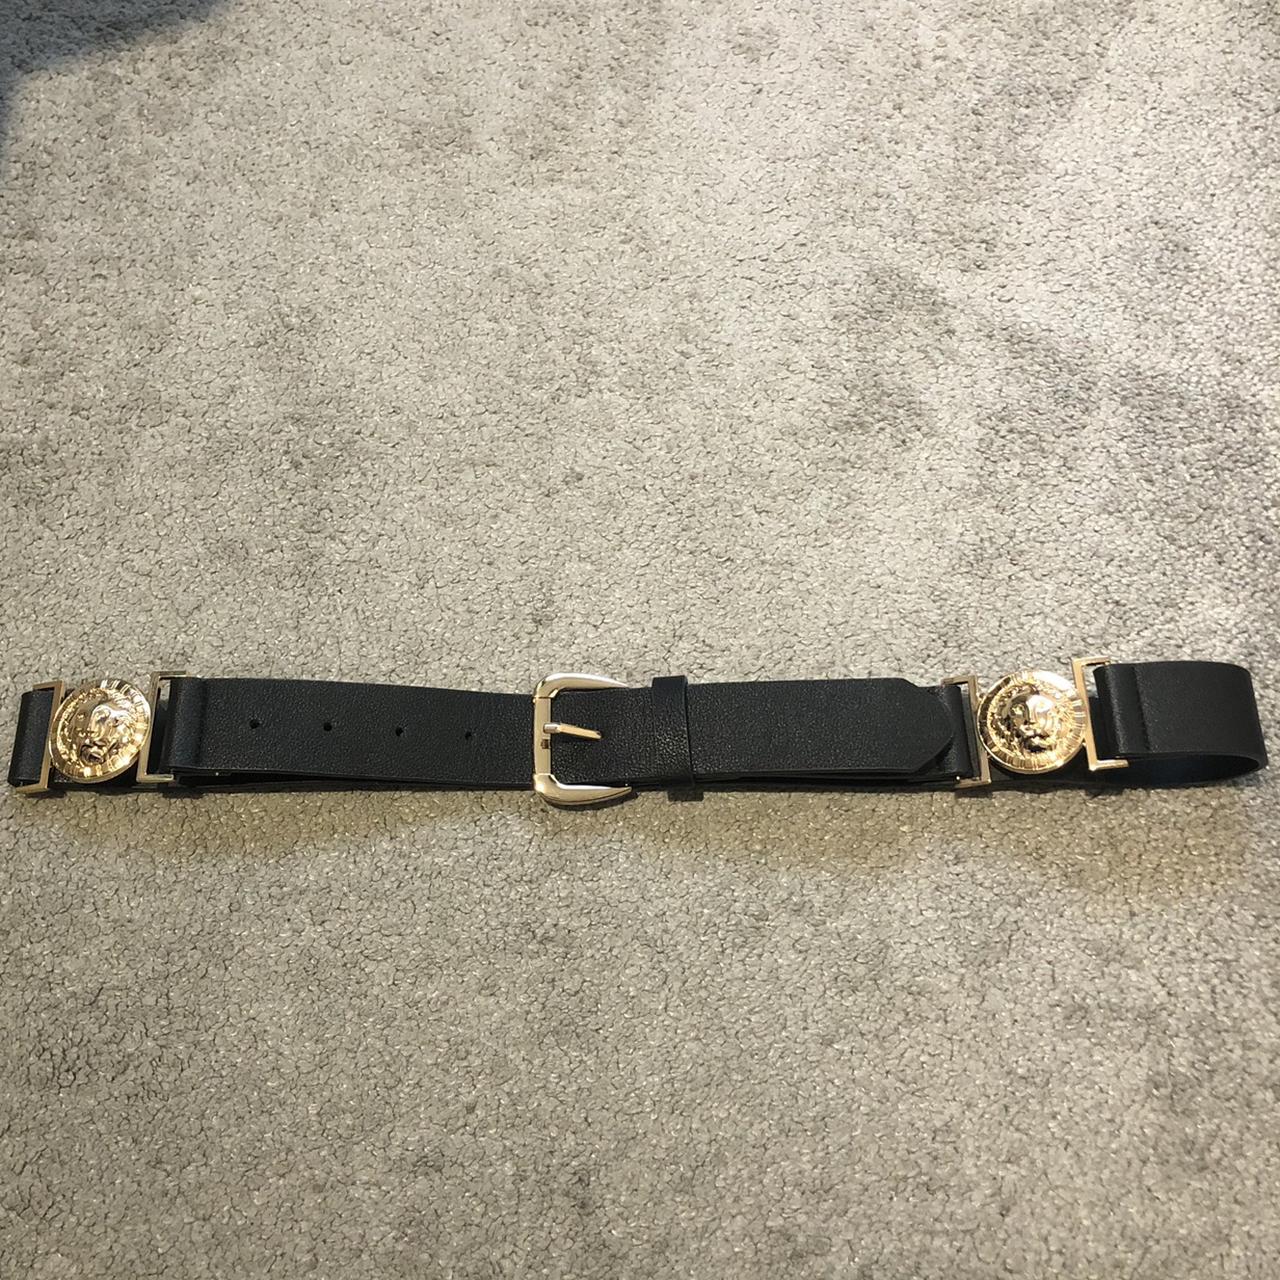 Gold lion belt (Looks designer) Brand new, in... - Depop